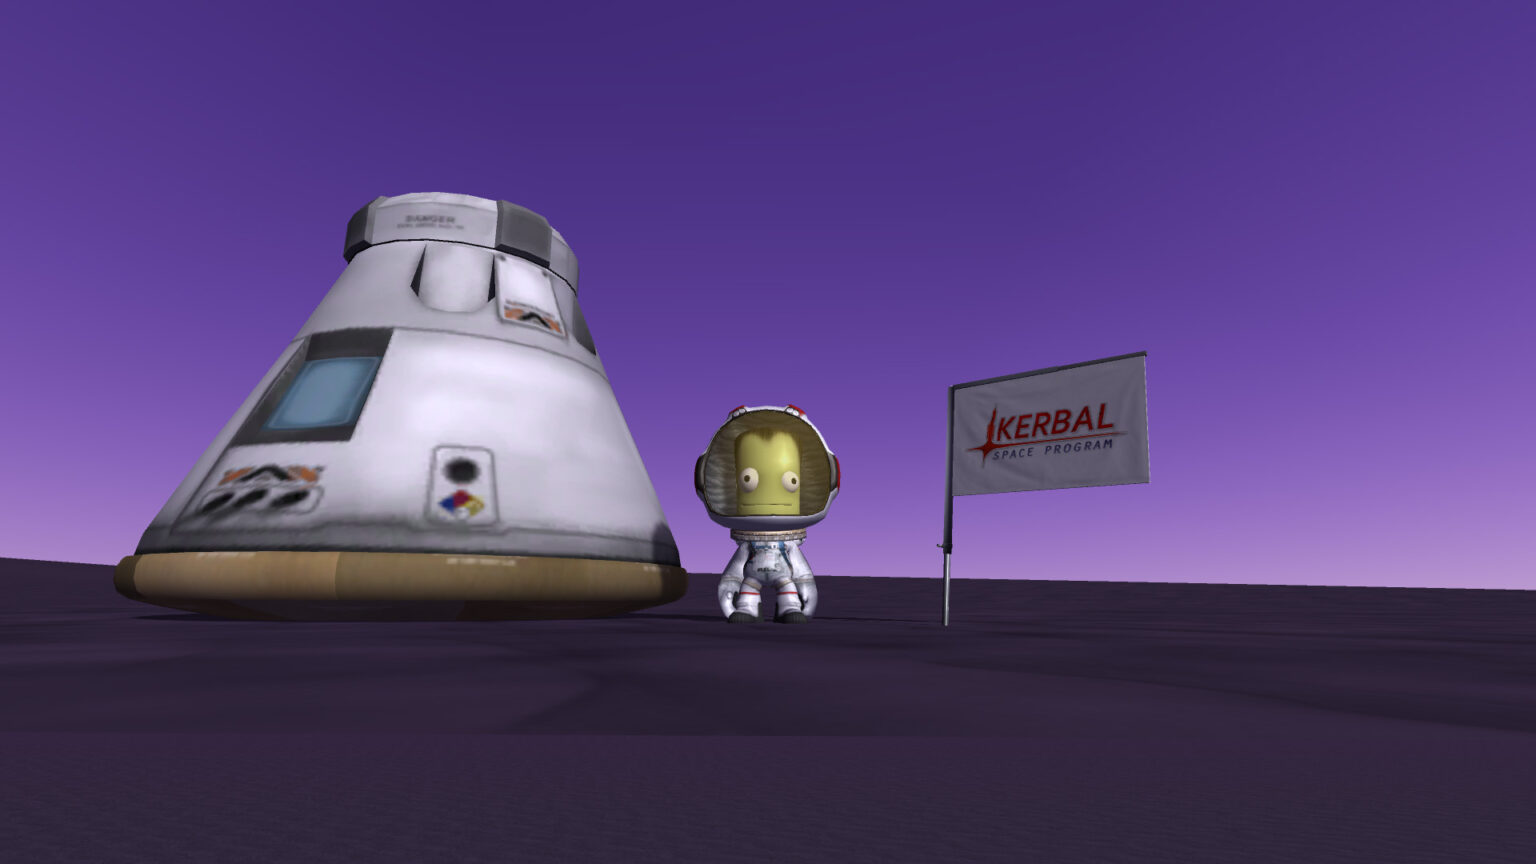 ps4 kerbal space program controls